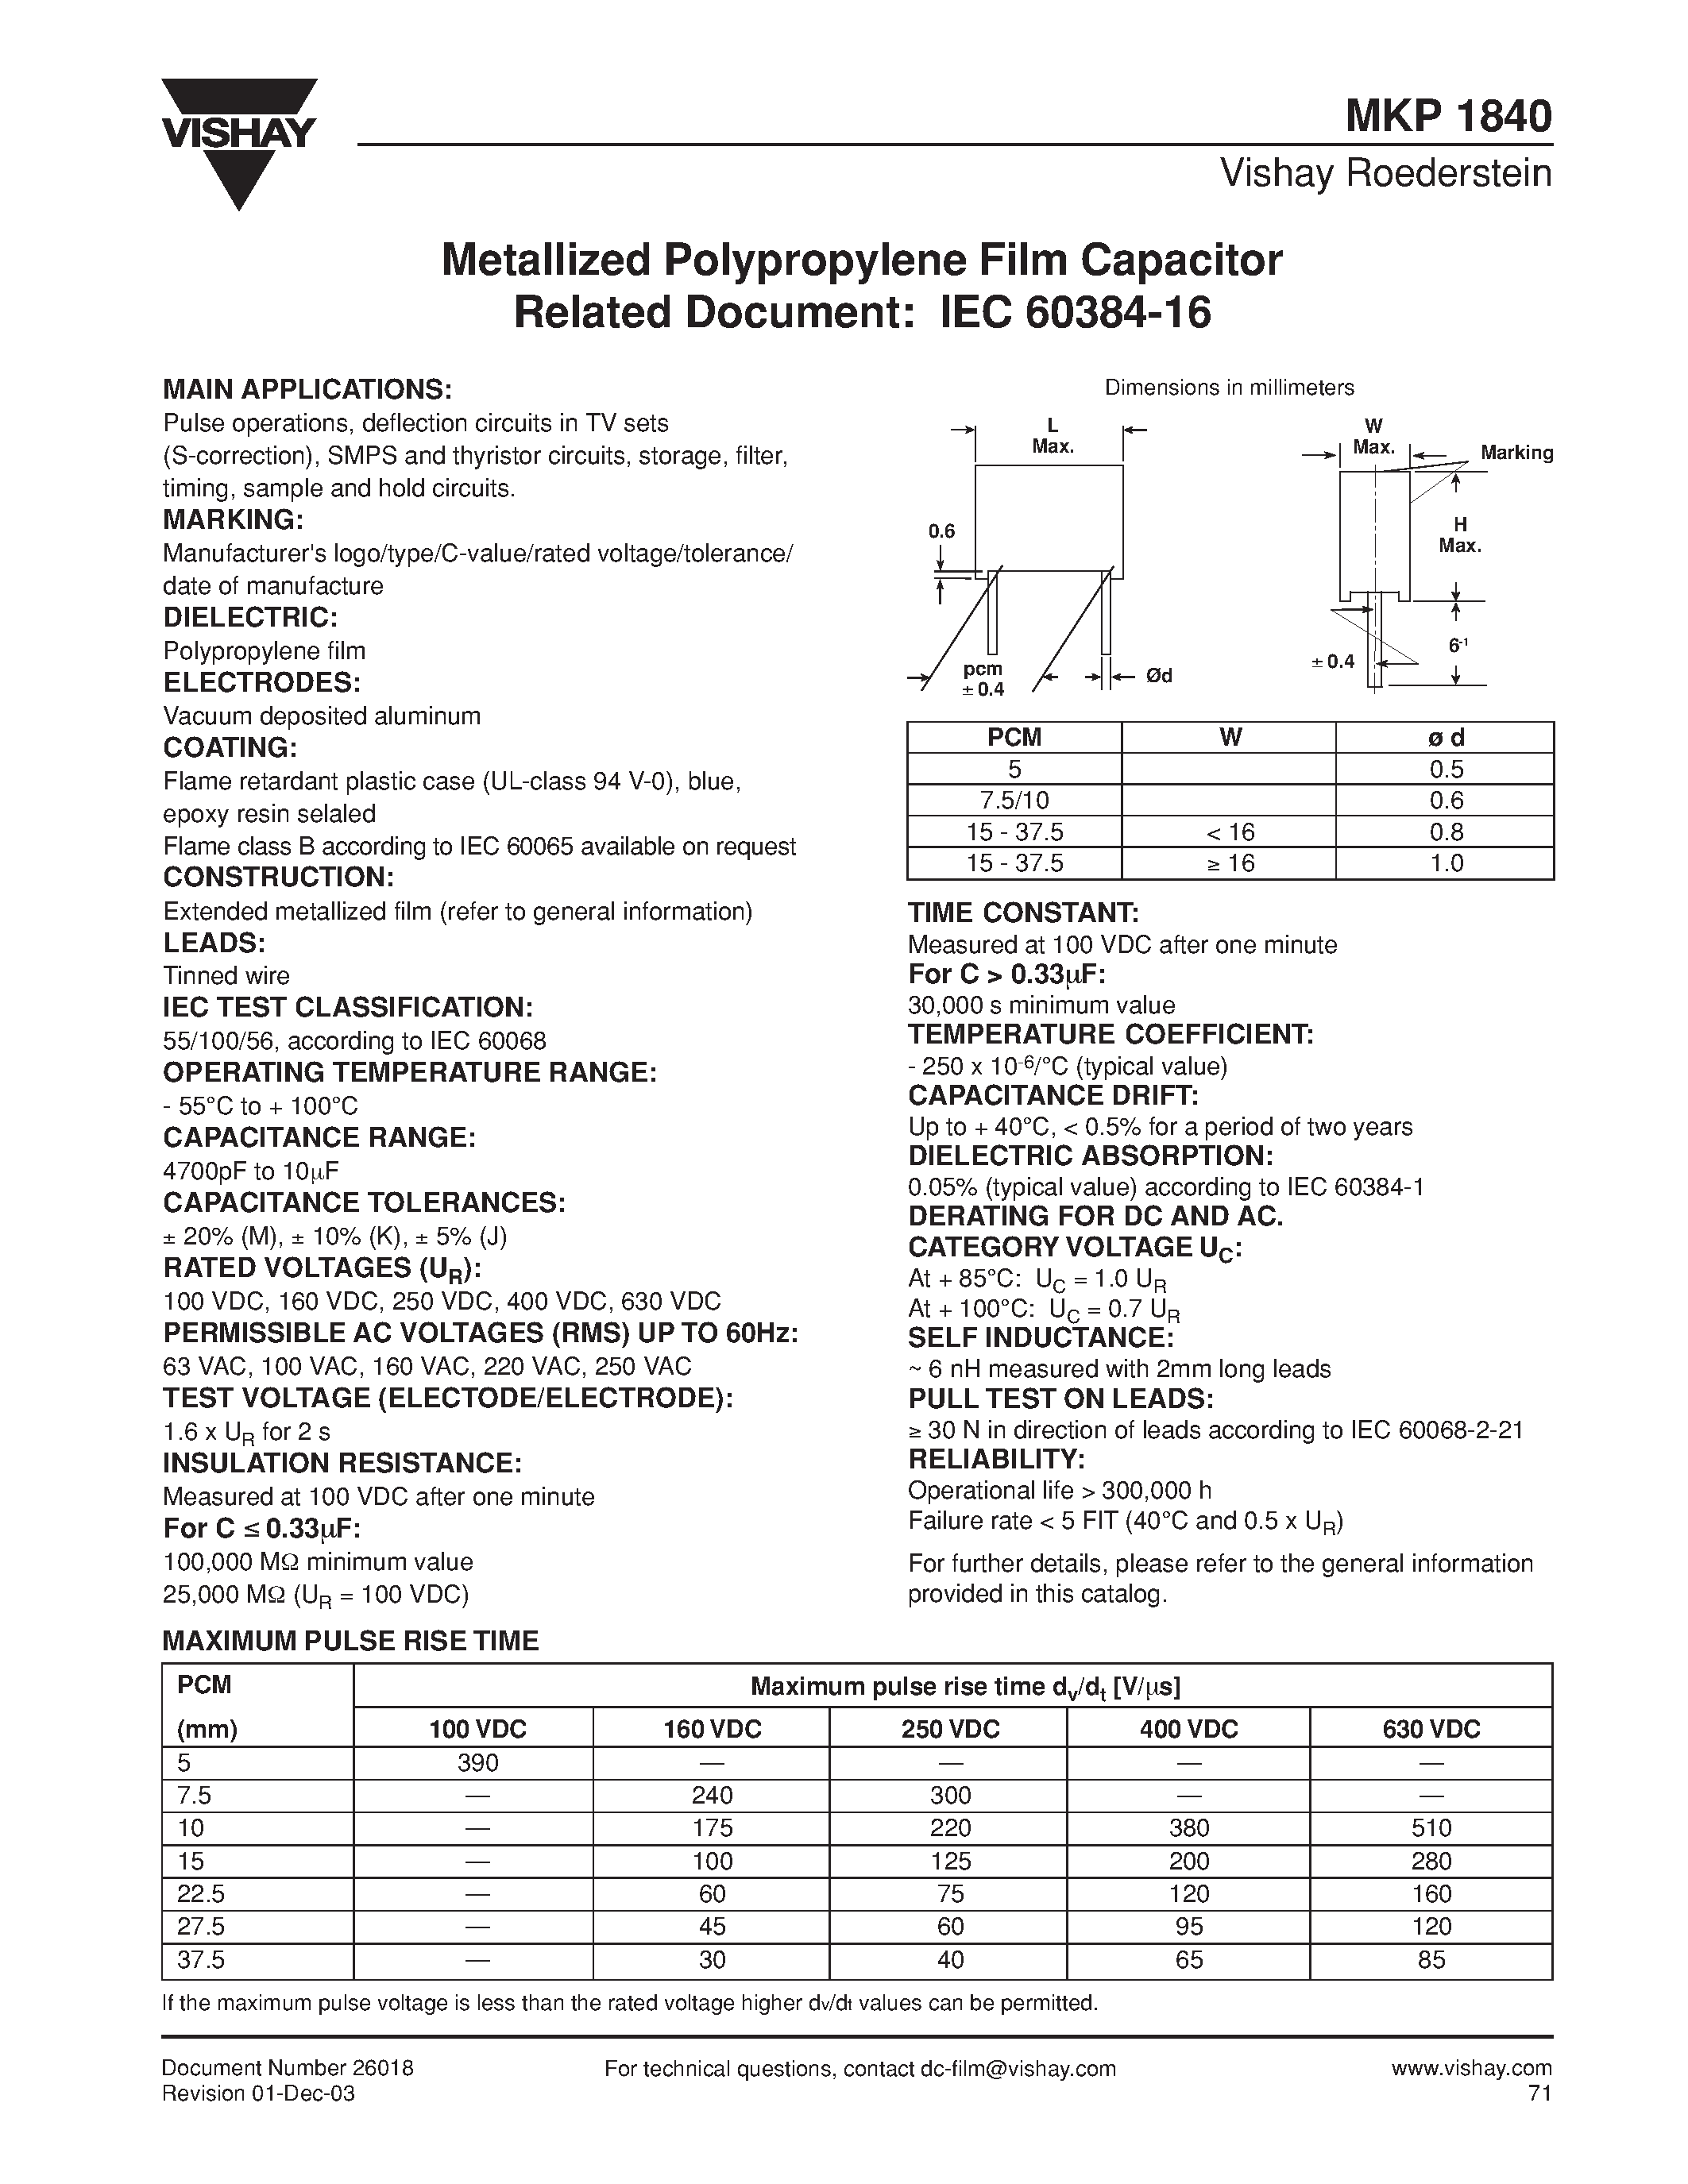 Даташит MKP1840-522-255-V - Metallized Polypropylene Film Capacitor Related Document: IEC 60384-16 страница 1